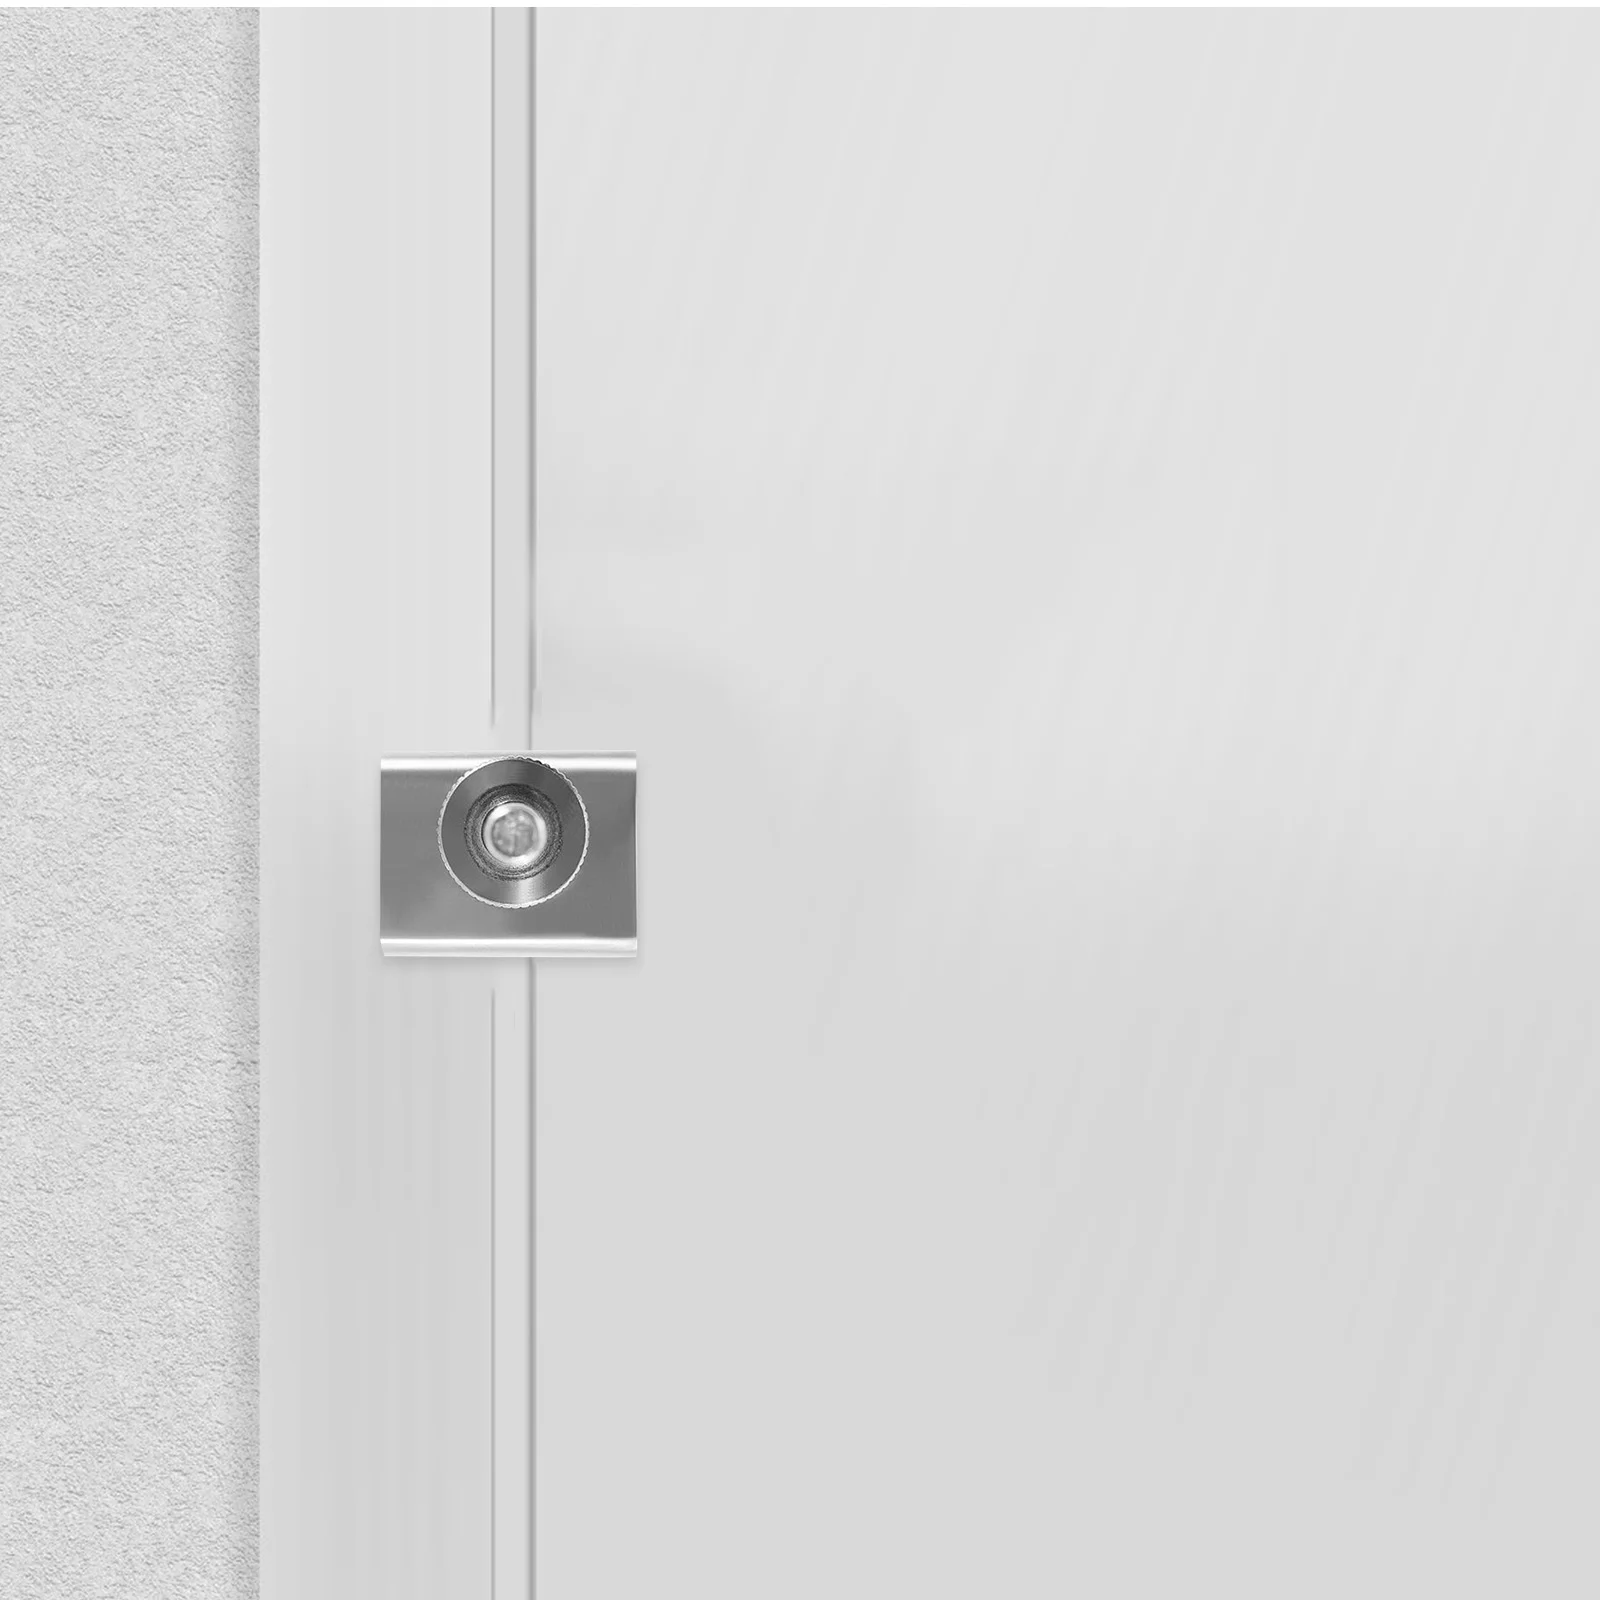 

Door Stopper Heavy Duty Hotel Locks for Travelers Rooms Household Stops Aluminum Alloy Security